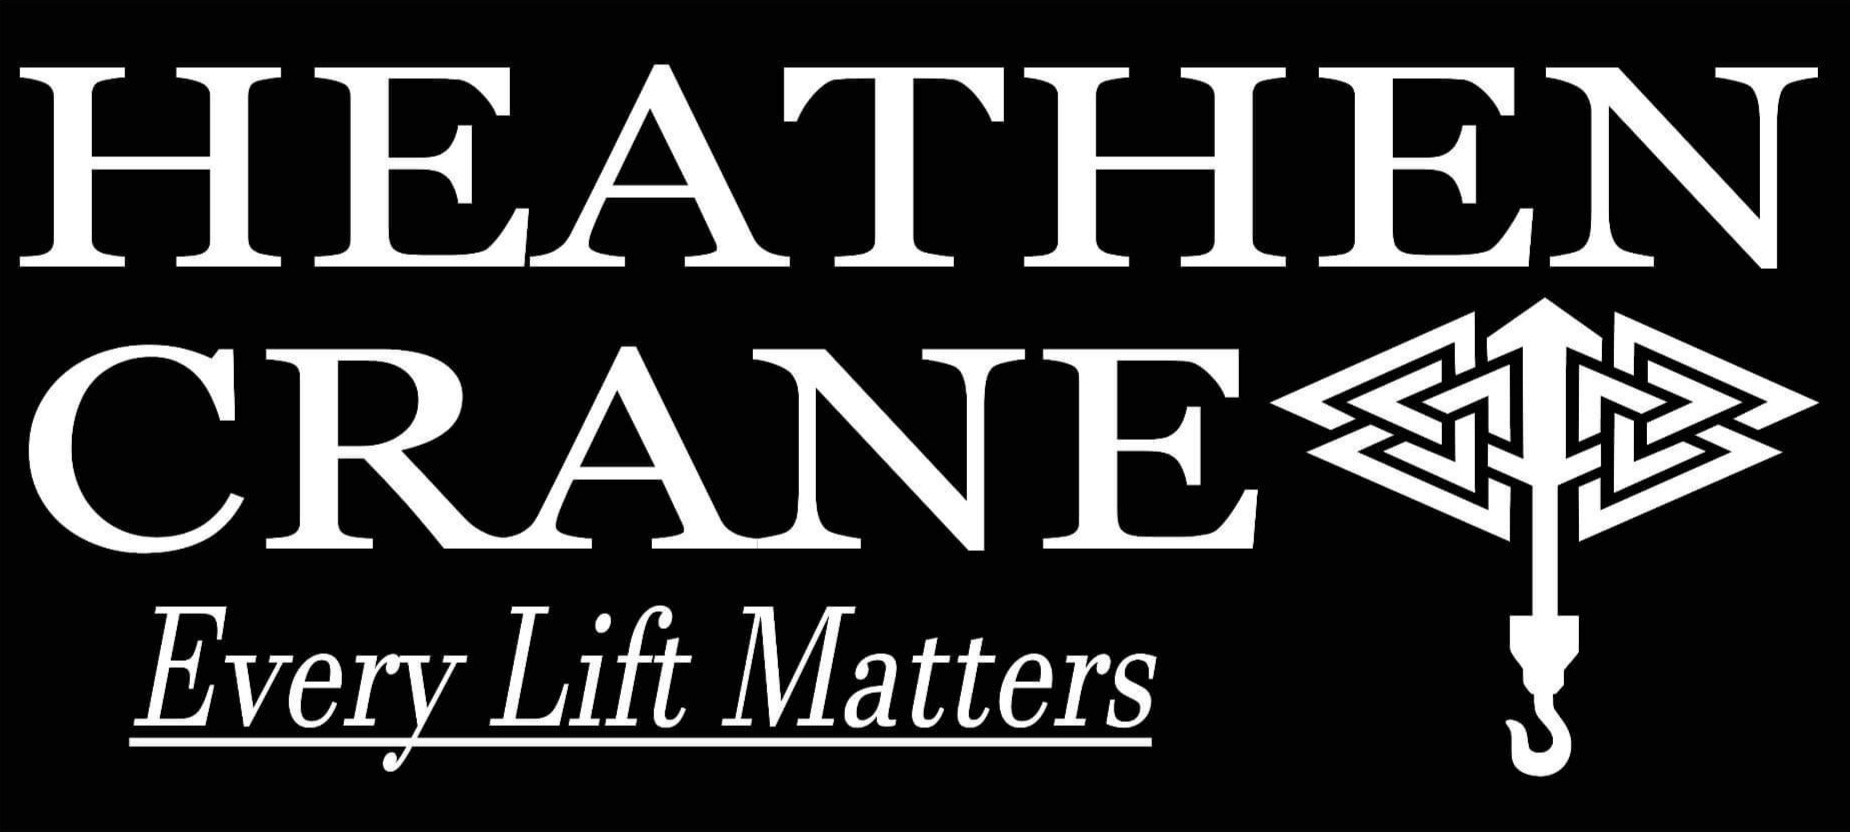 Heathen Crane - Every Lift Matters - logo